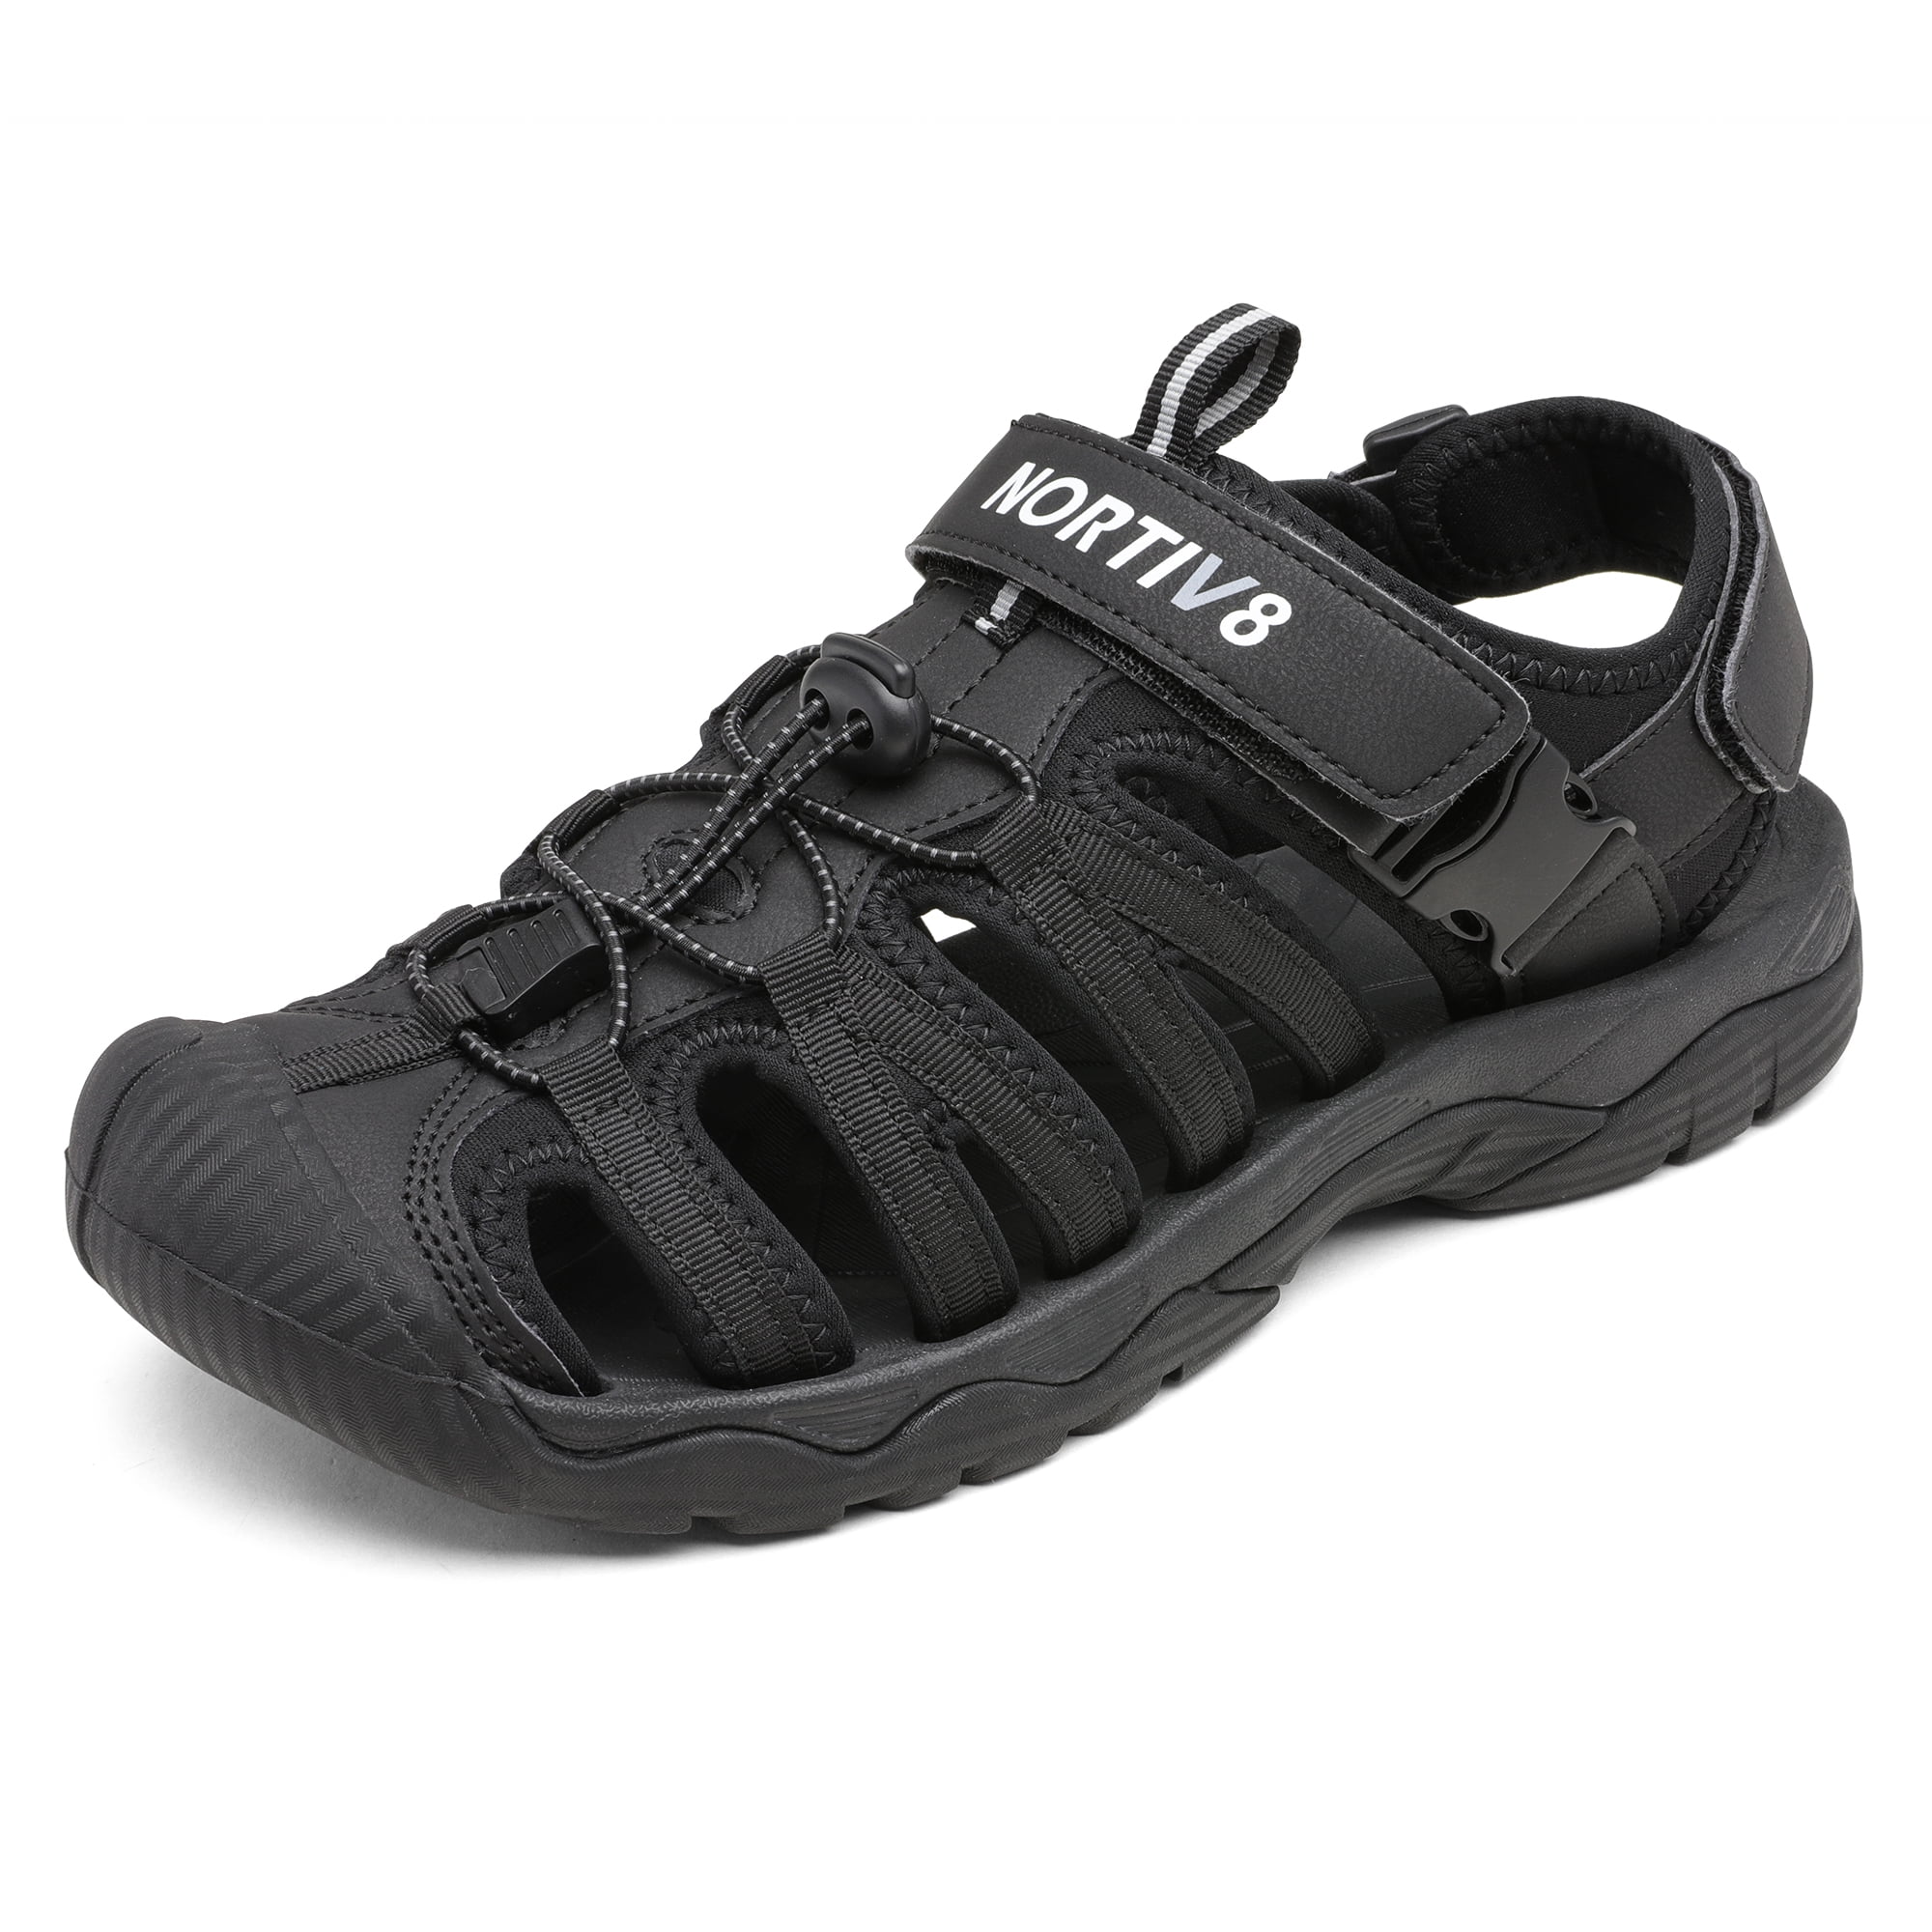 Closed Toe Athletic Sport Sandals Lightweight Trail Walking Sandals for Men Mens Summer Shoes NORTIV8 Men's Sandals 